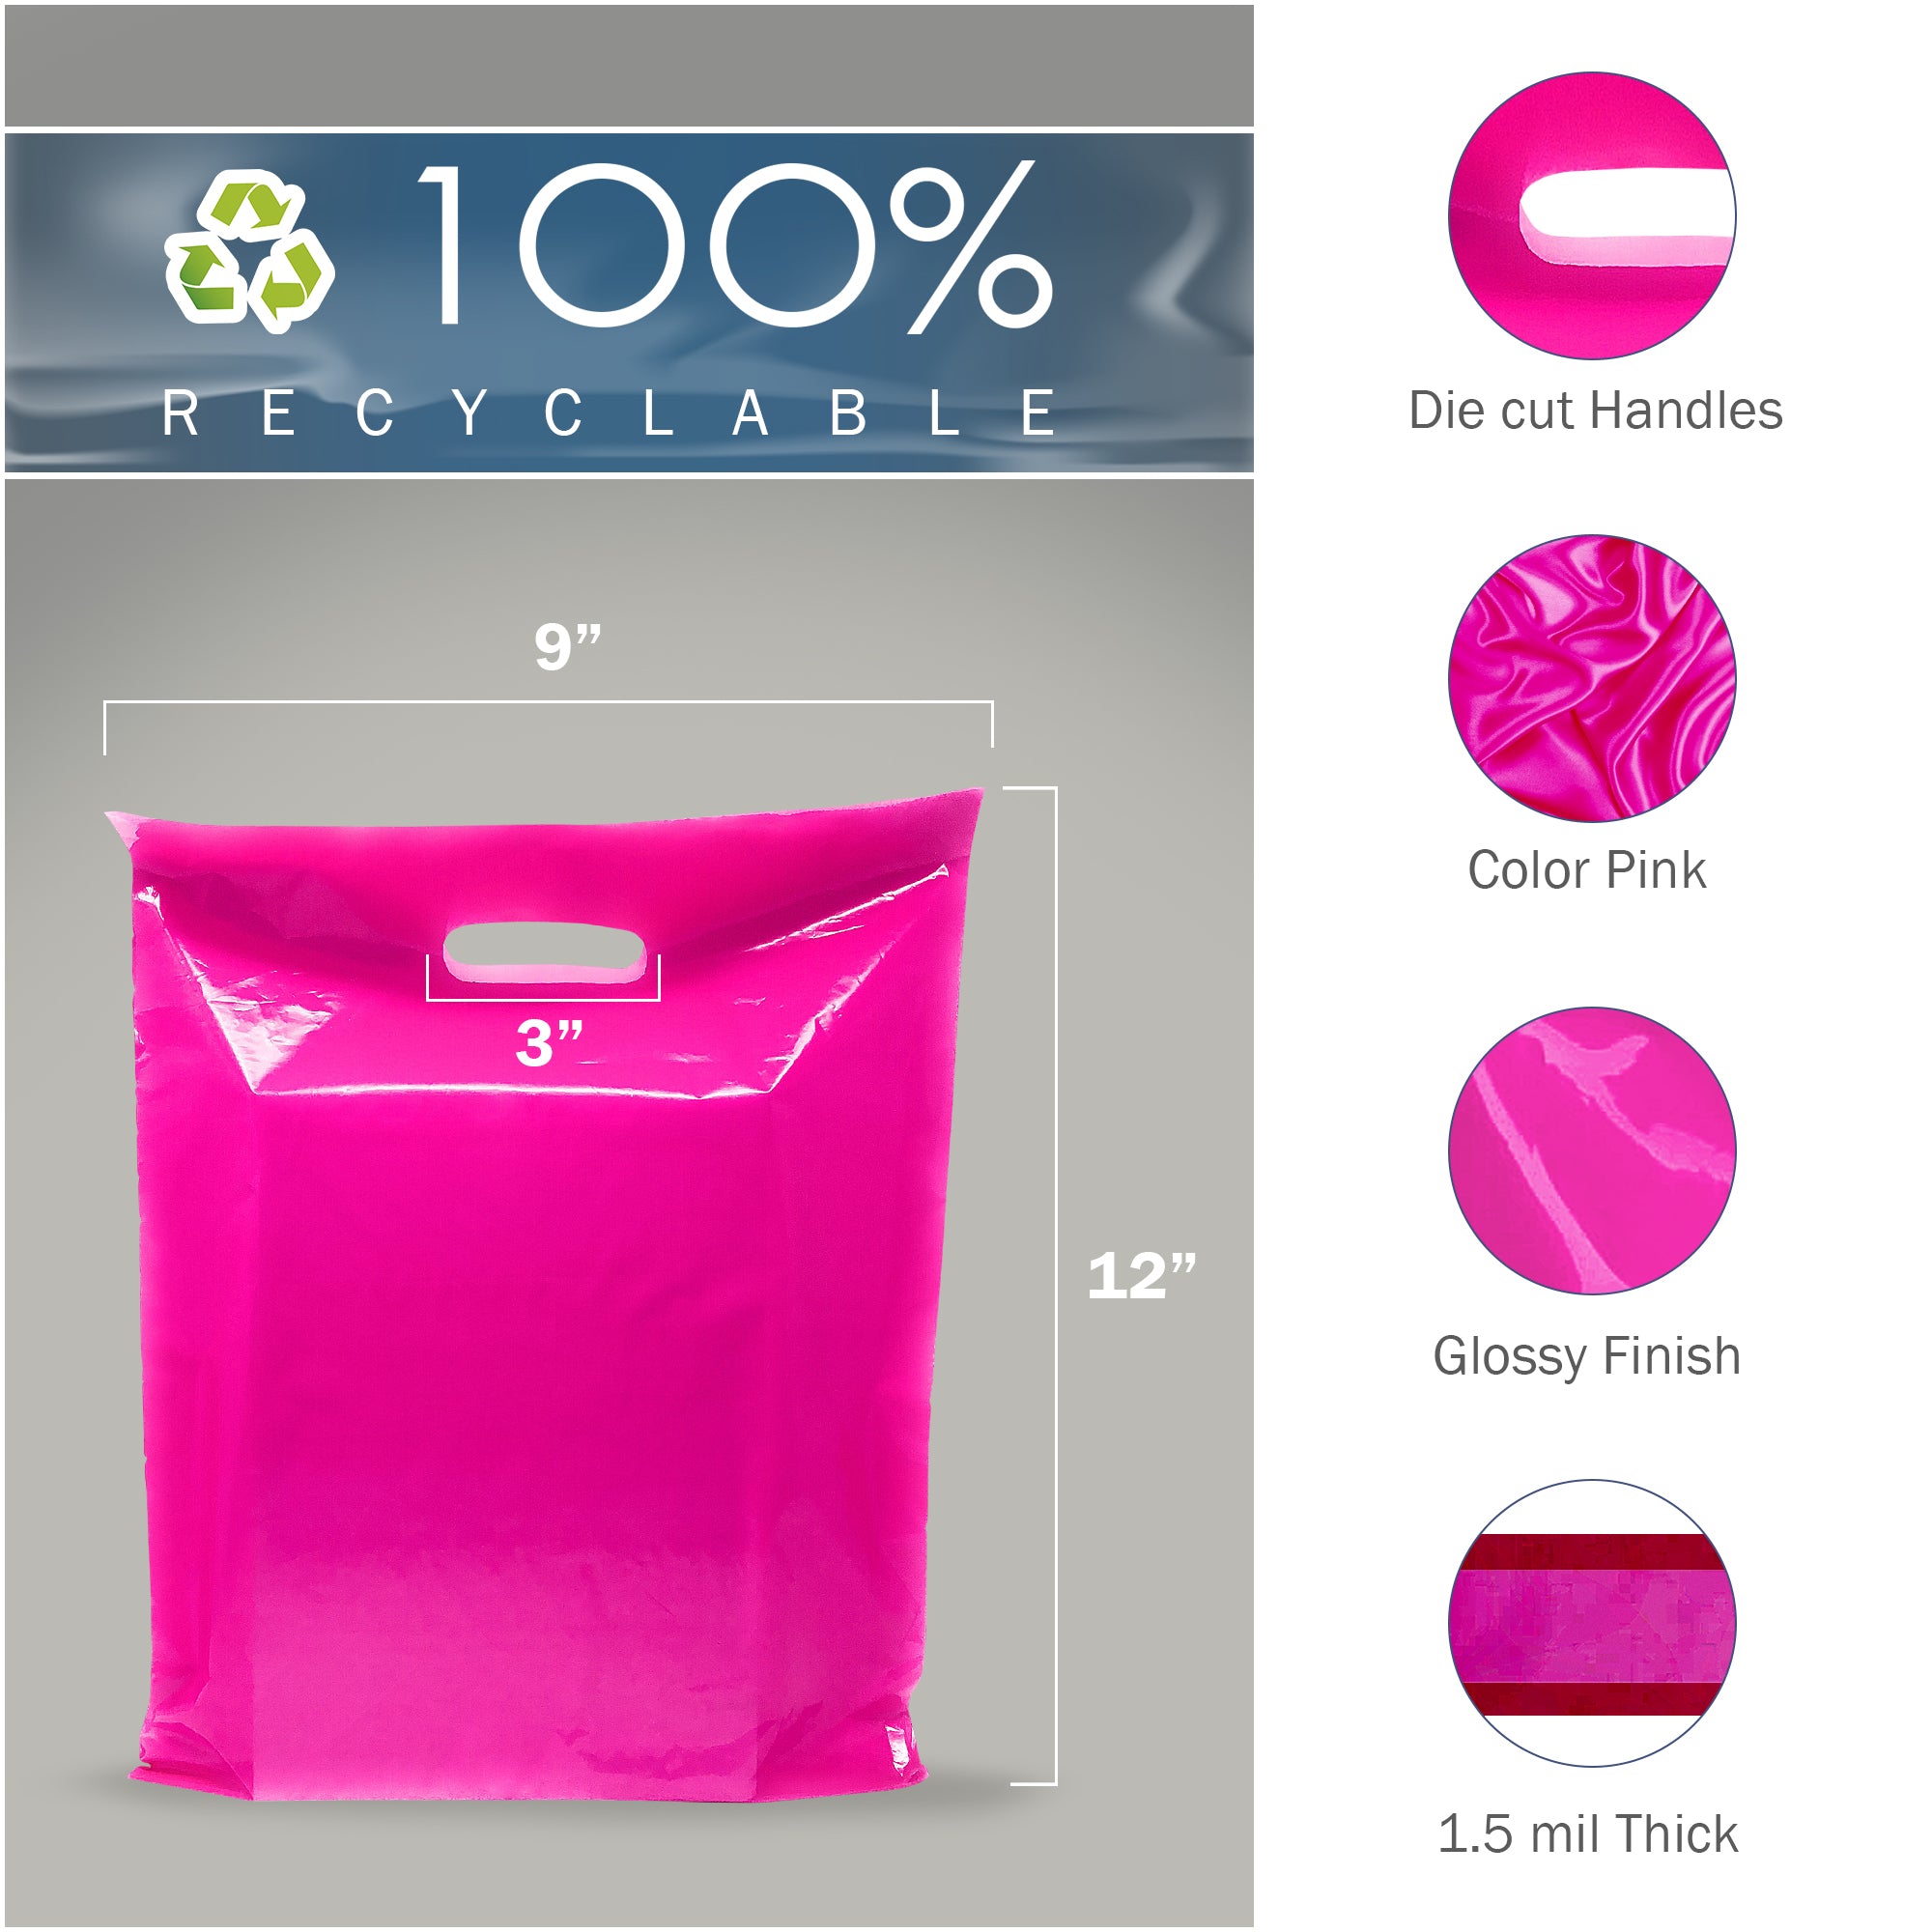 20pcs Pink 9x12cm Packaging Bags